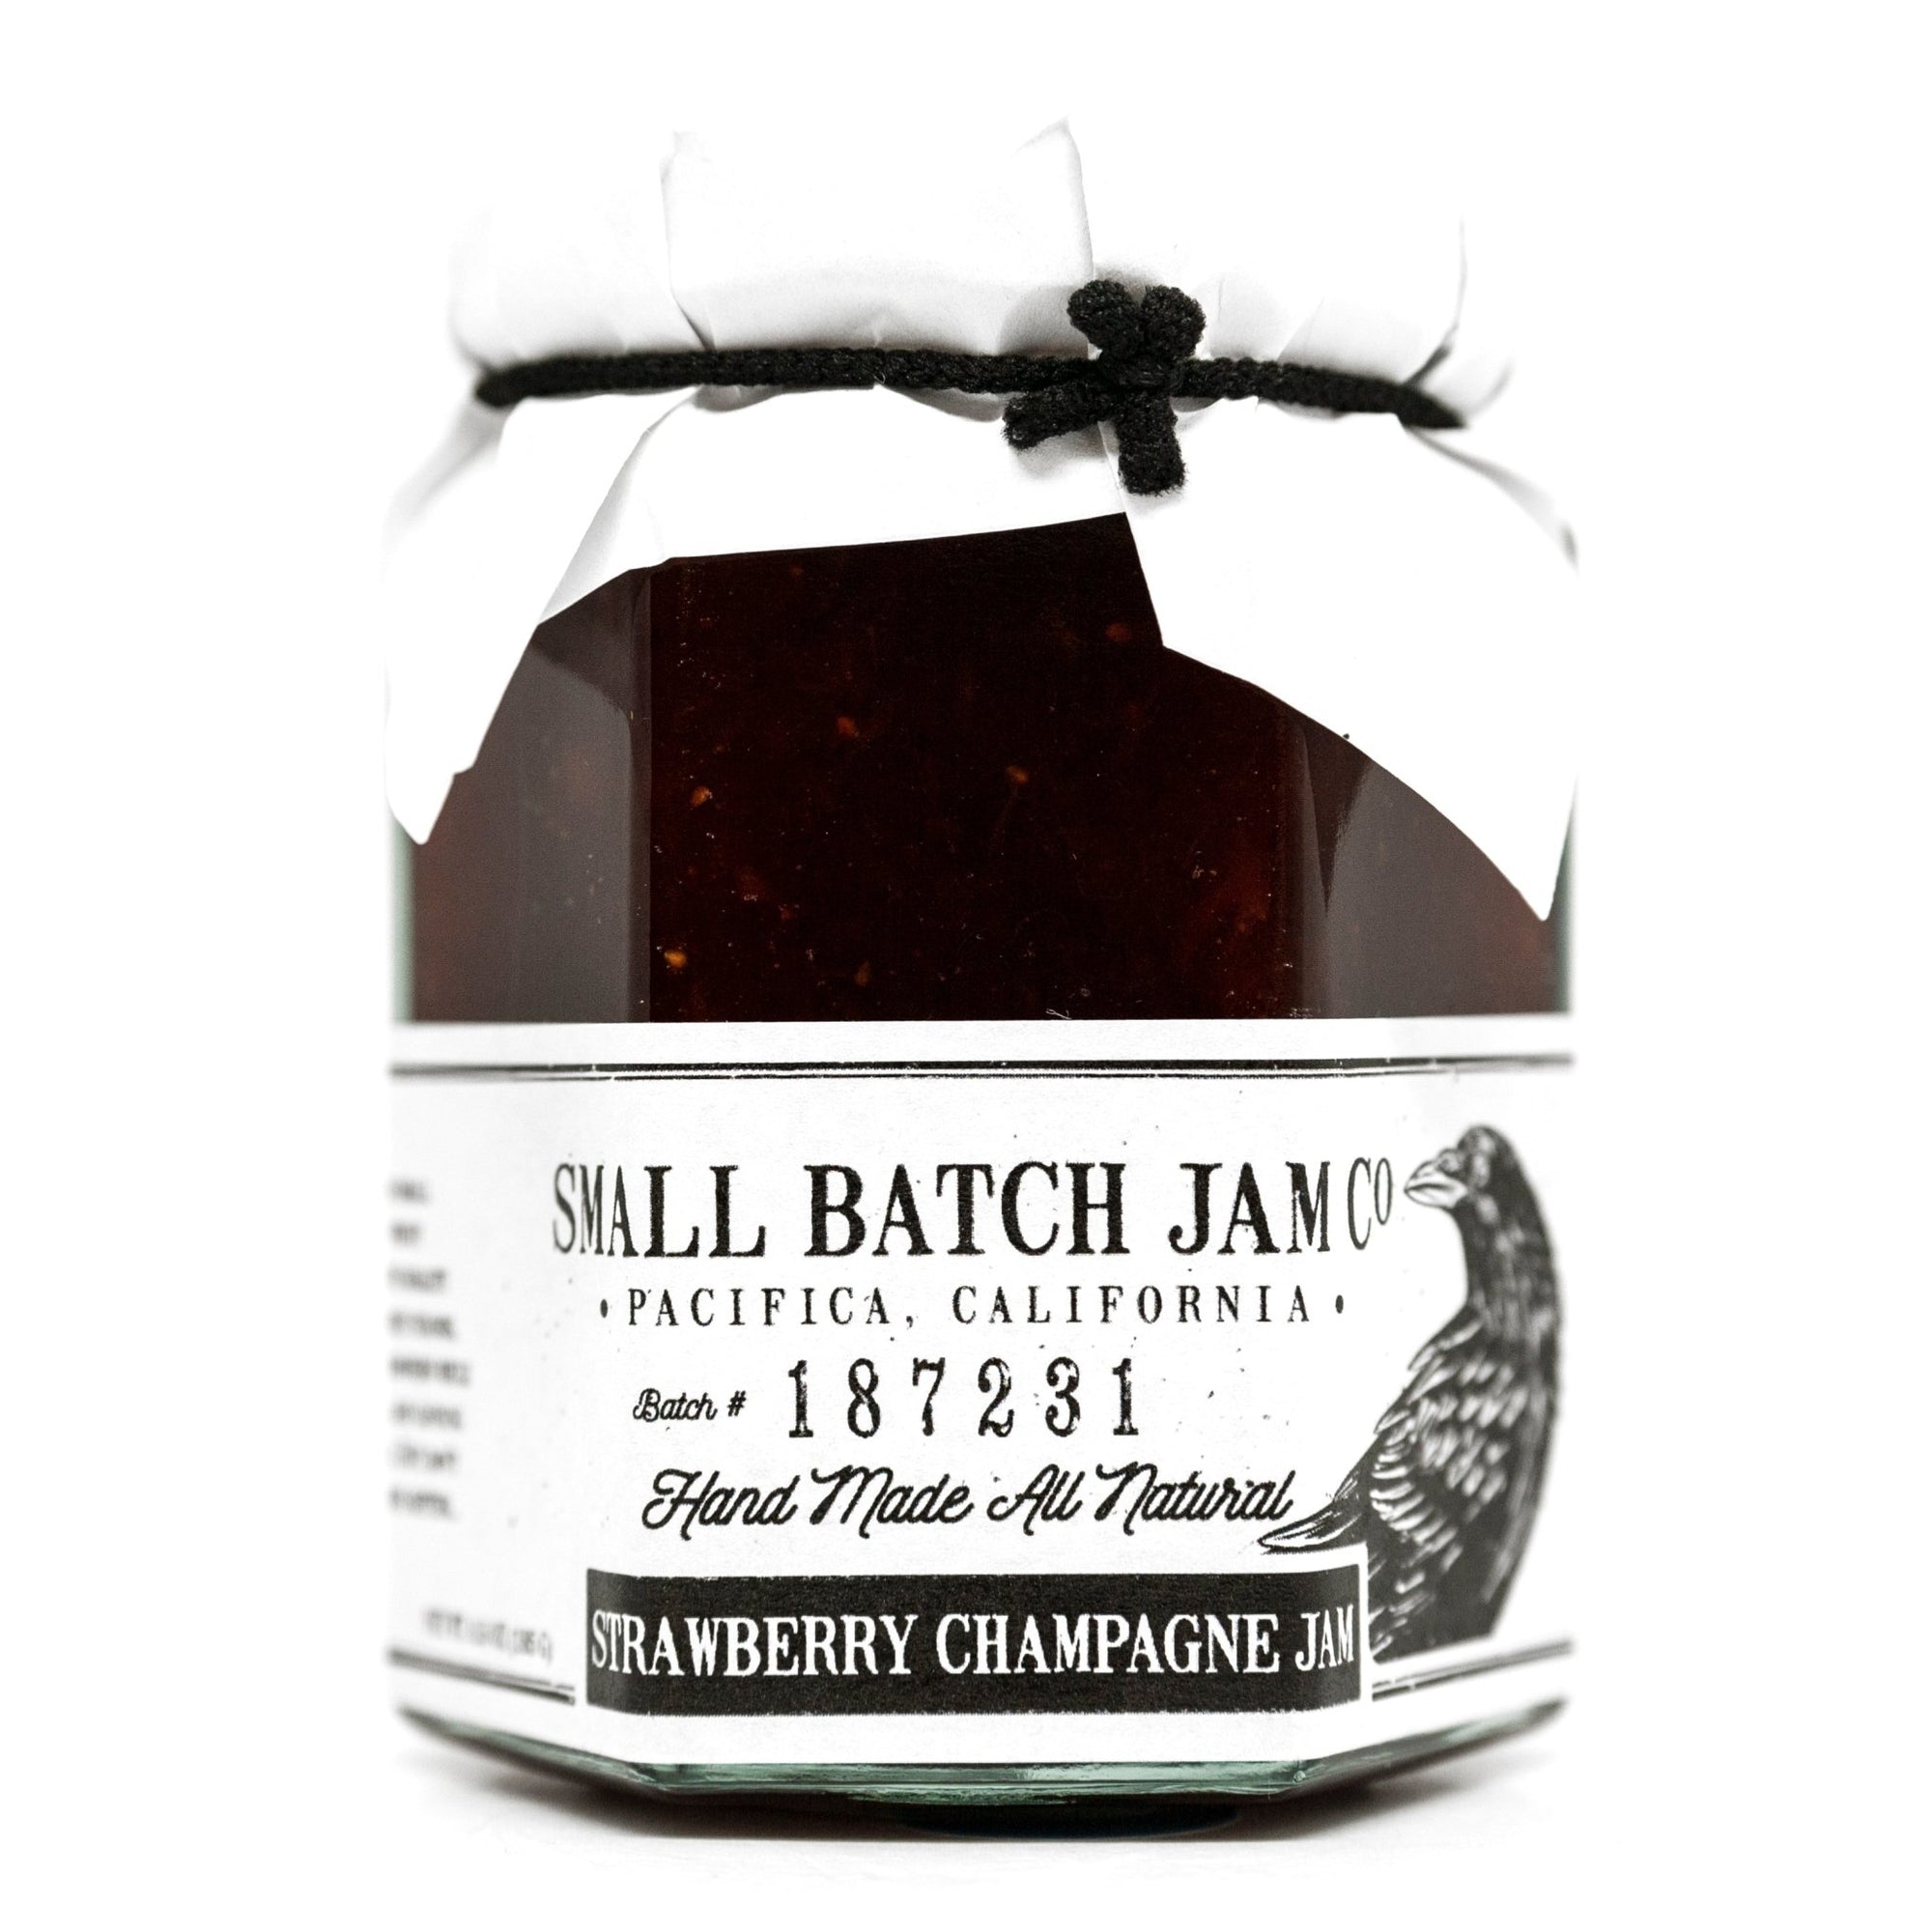 Strawberry Champagne Jam - Small Batch Jam Co